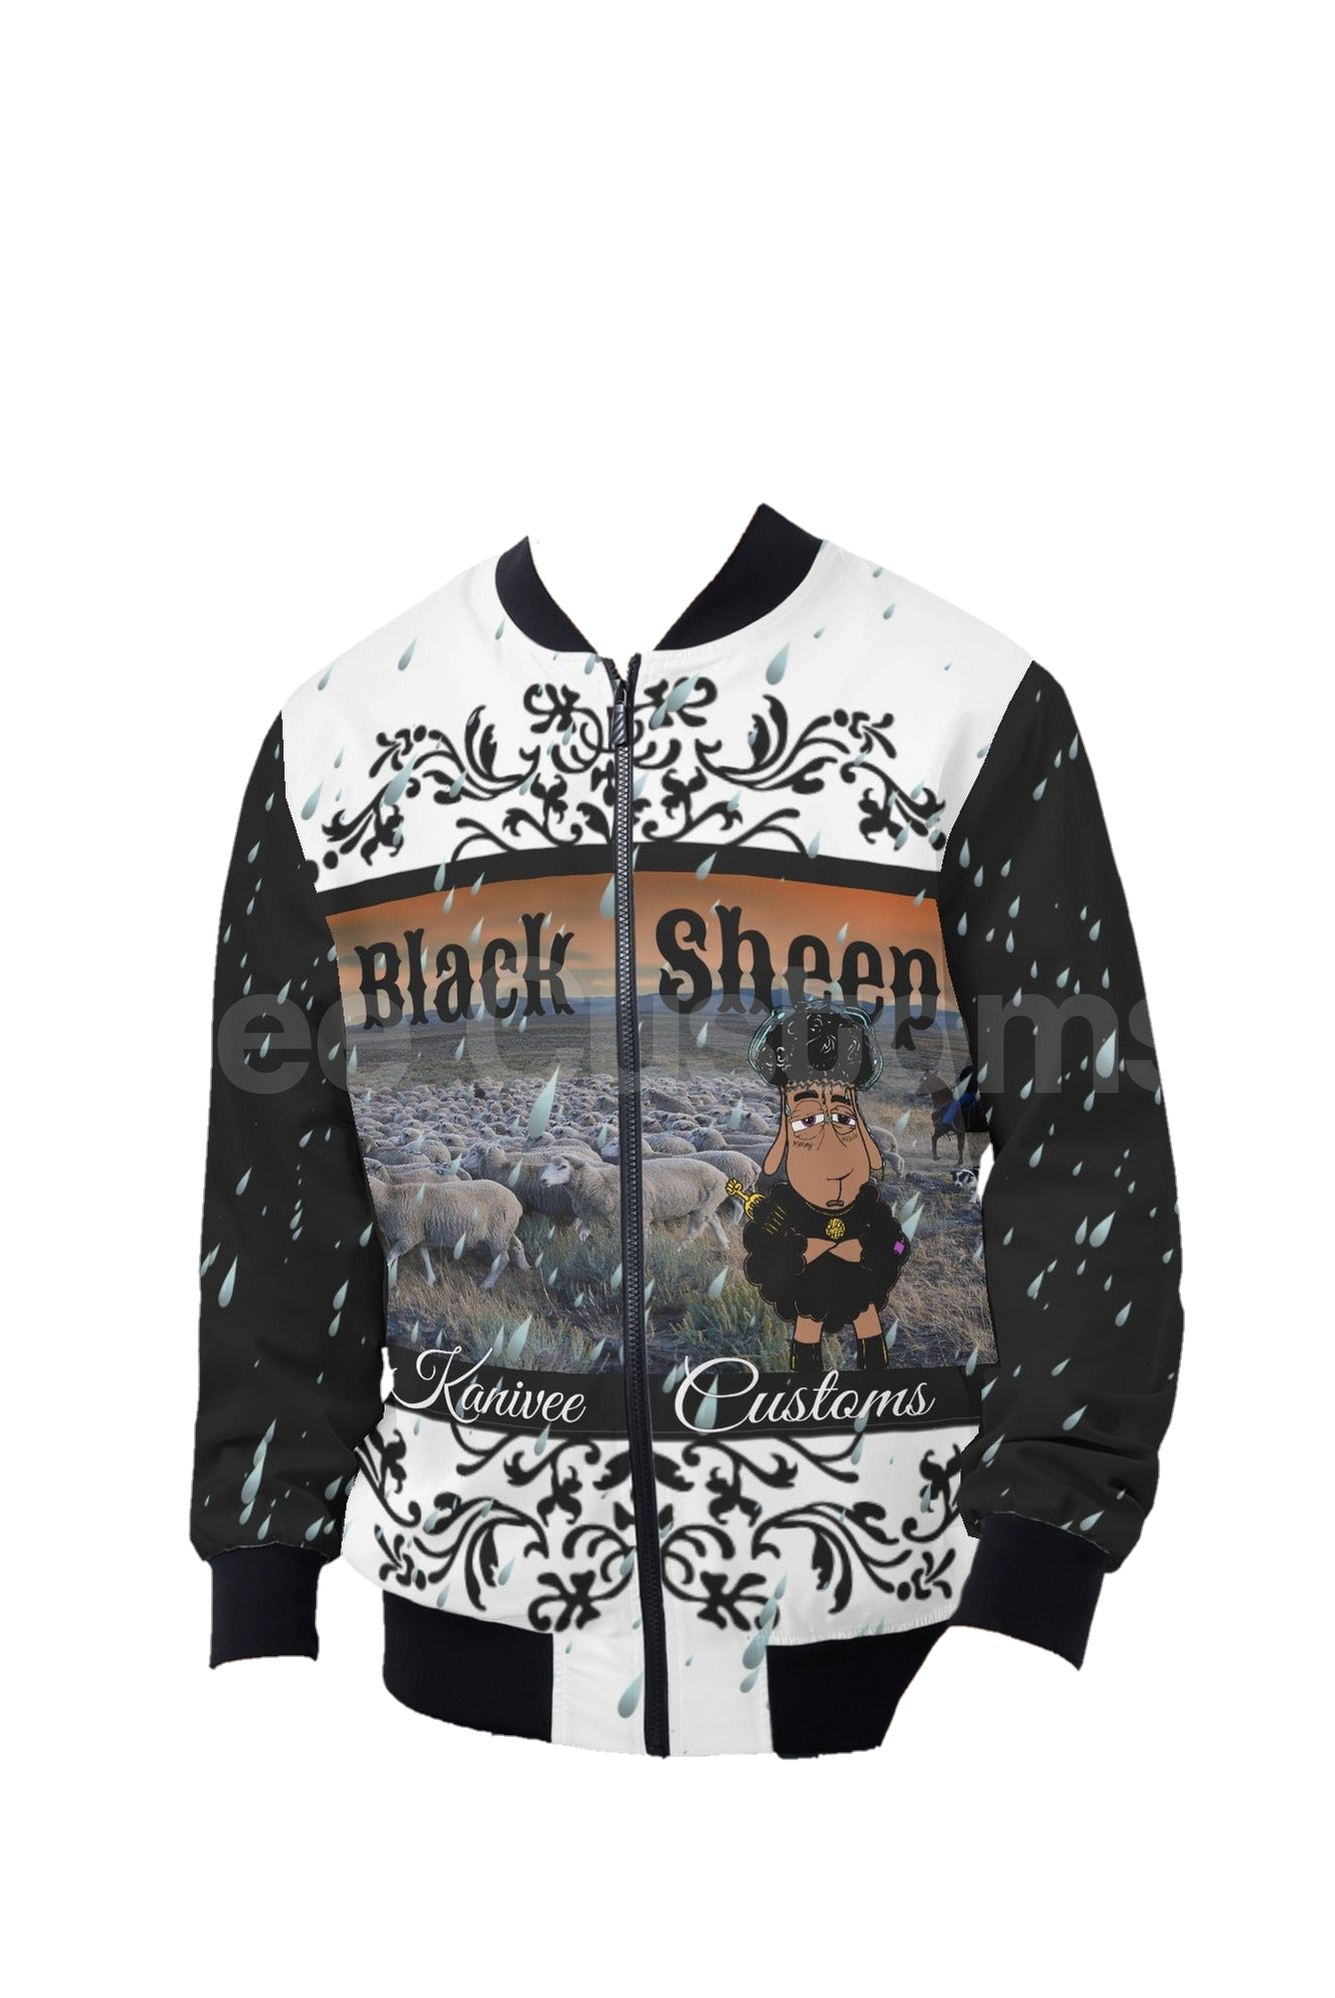 BlackSheep NeverFazed Jacket (Lv.2) - Kanivee Customs